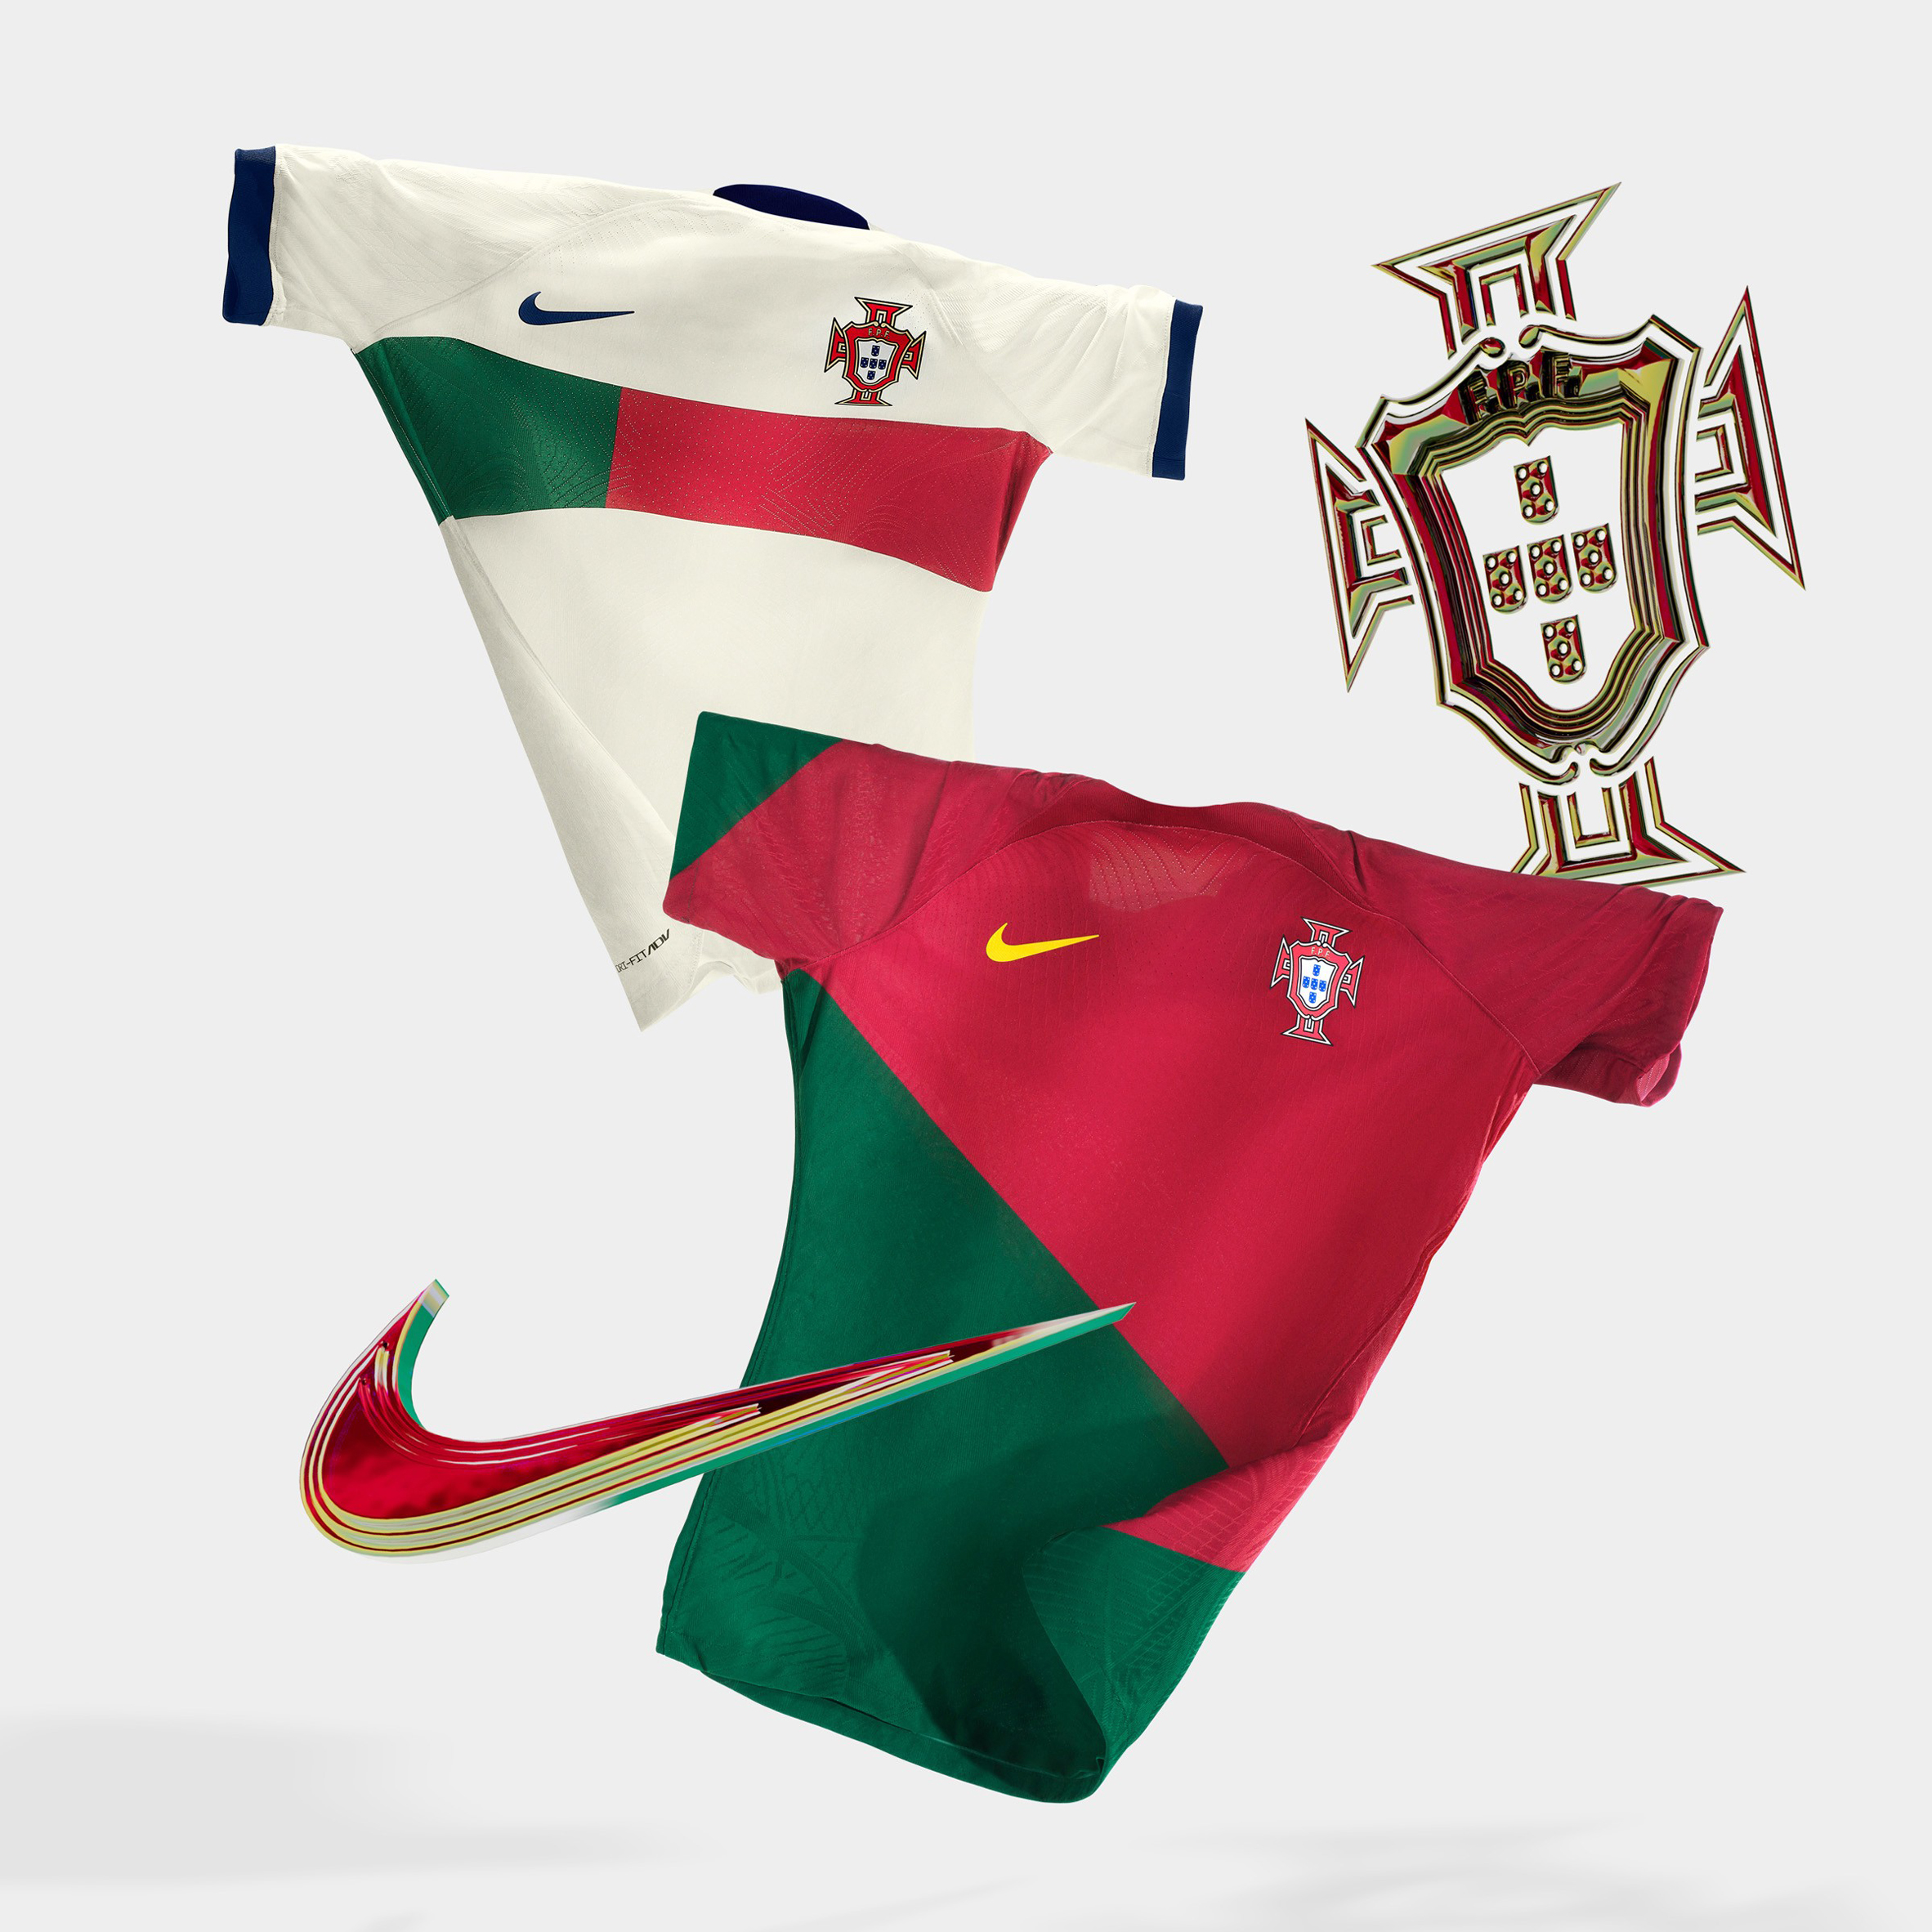 Portuguese football shirts by Nike